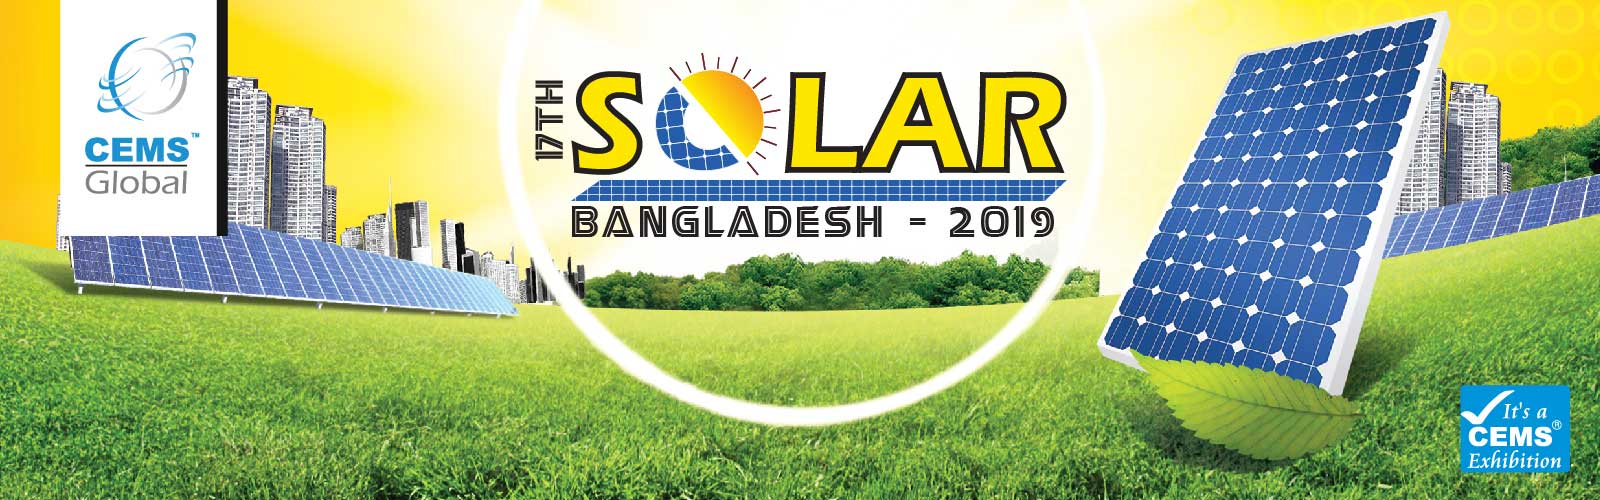  17th Solar Bangladesh 2019 International Expo